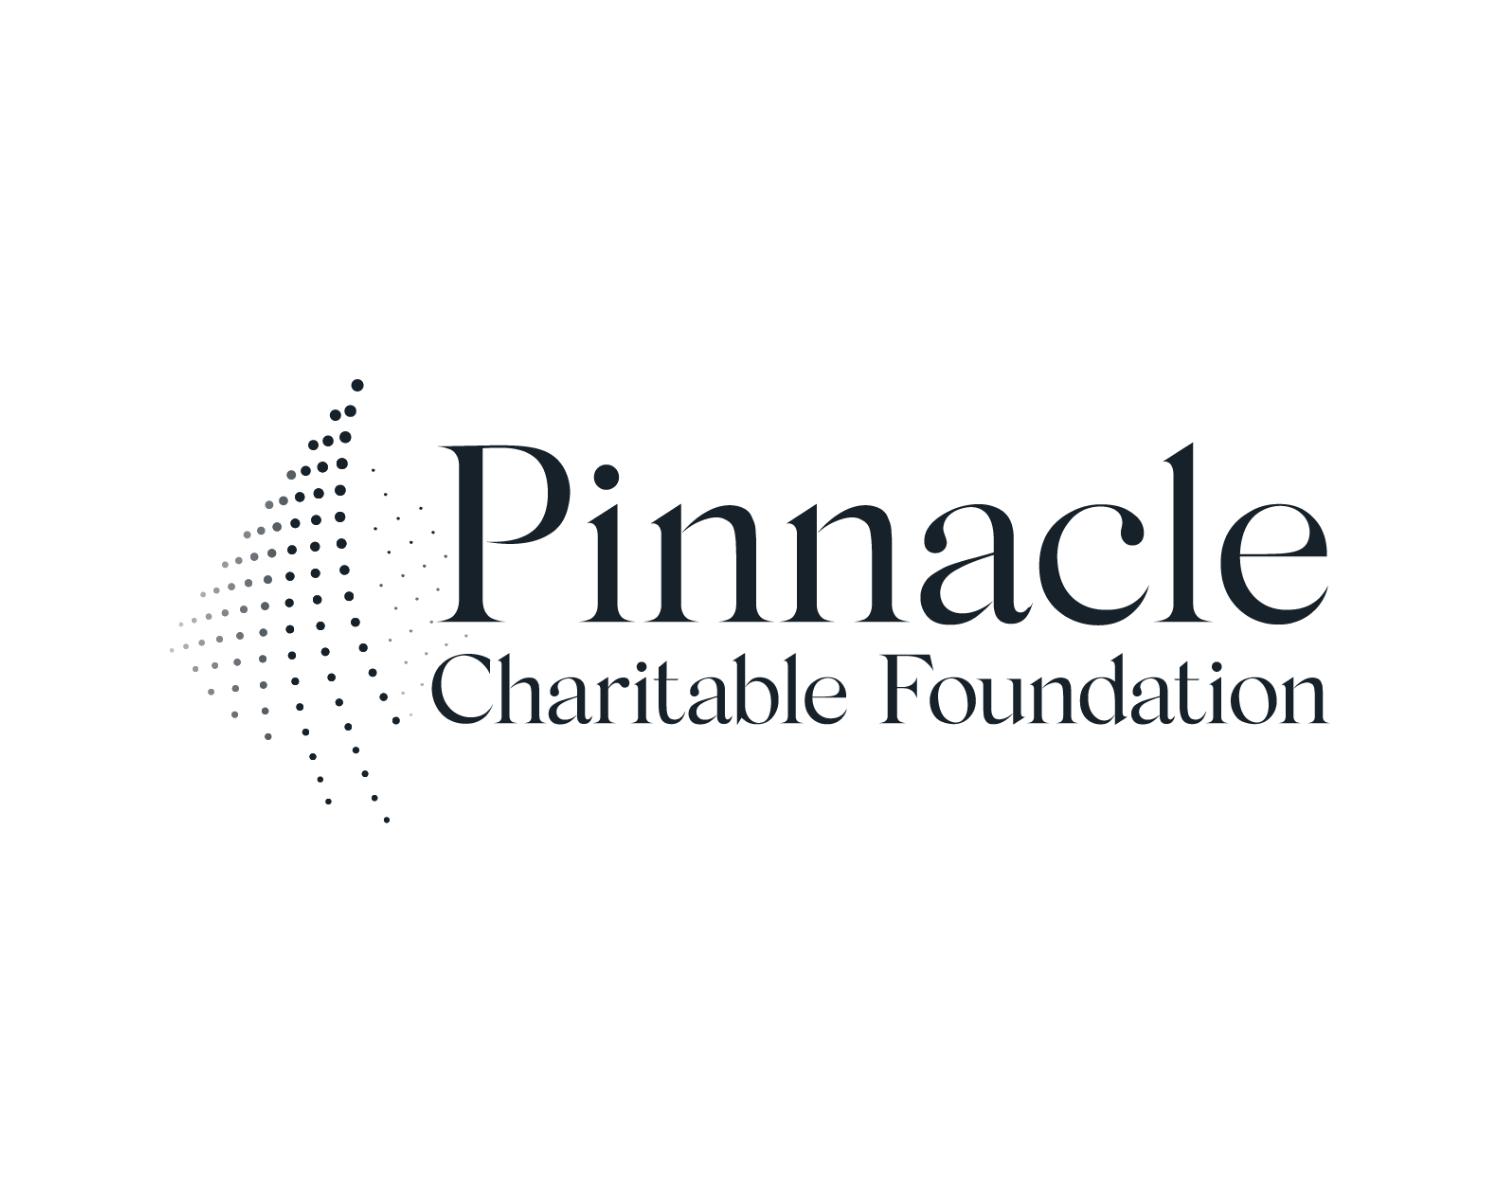 Pinnacle Charitable Foundation